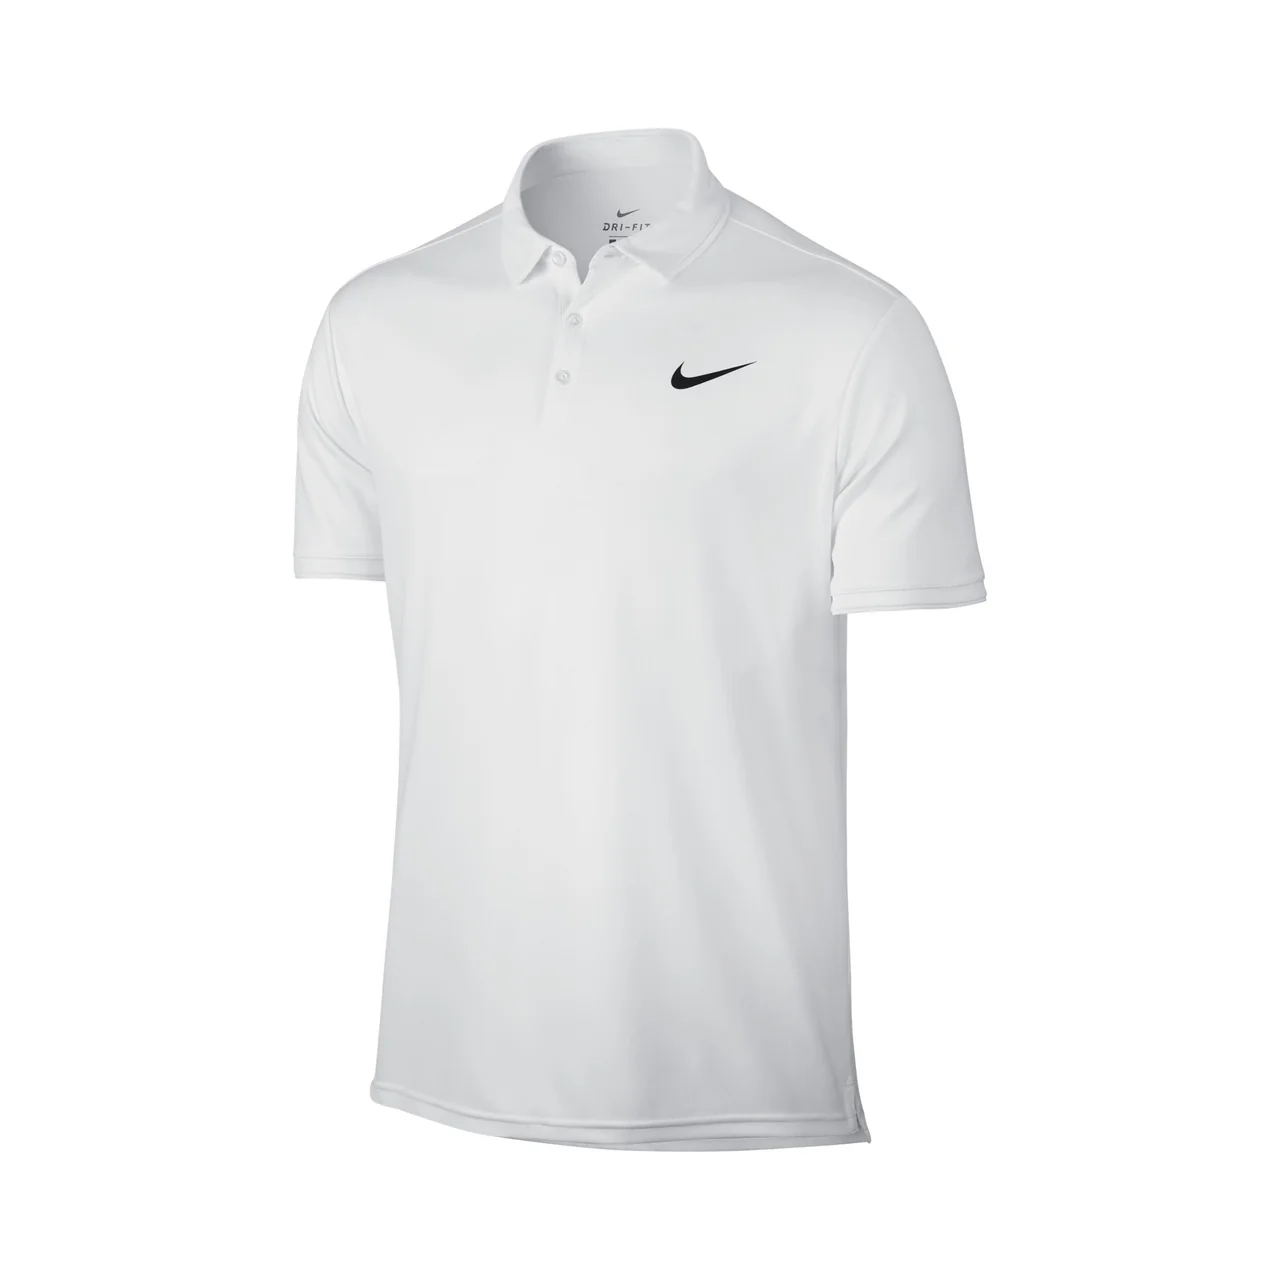 Nike Dry Team Polo All White Size S